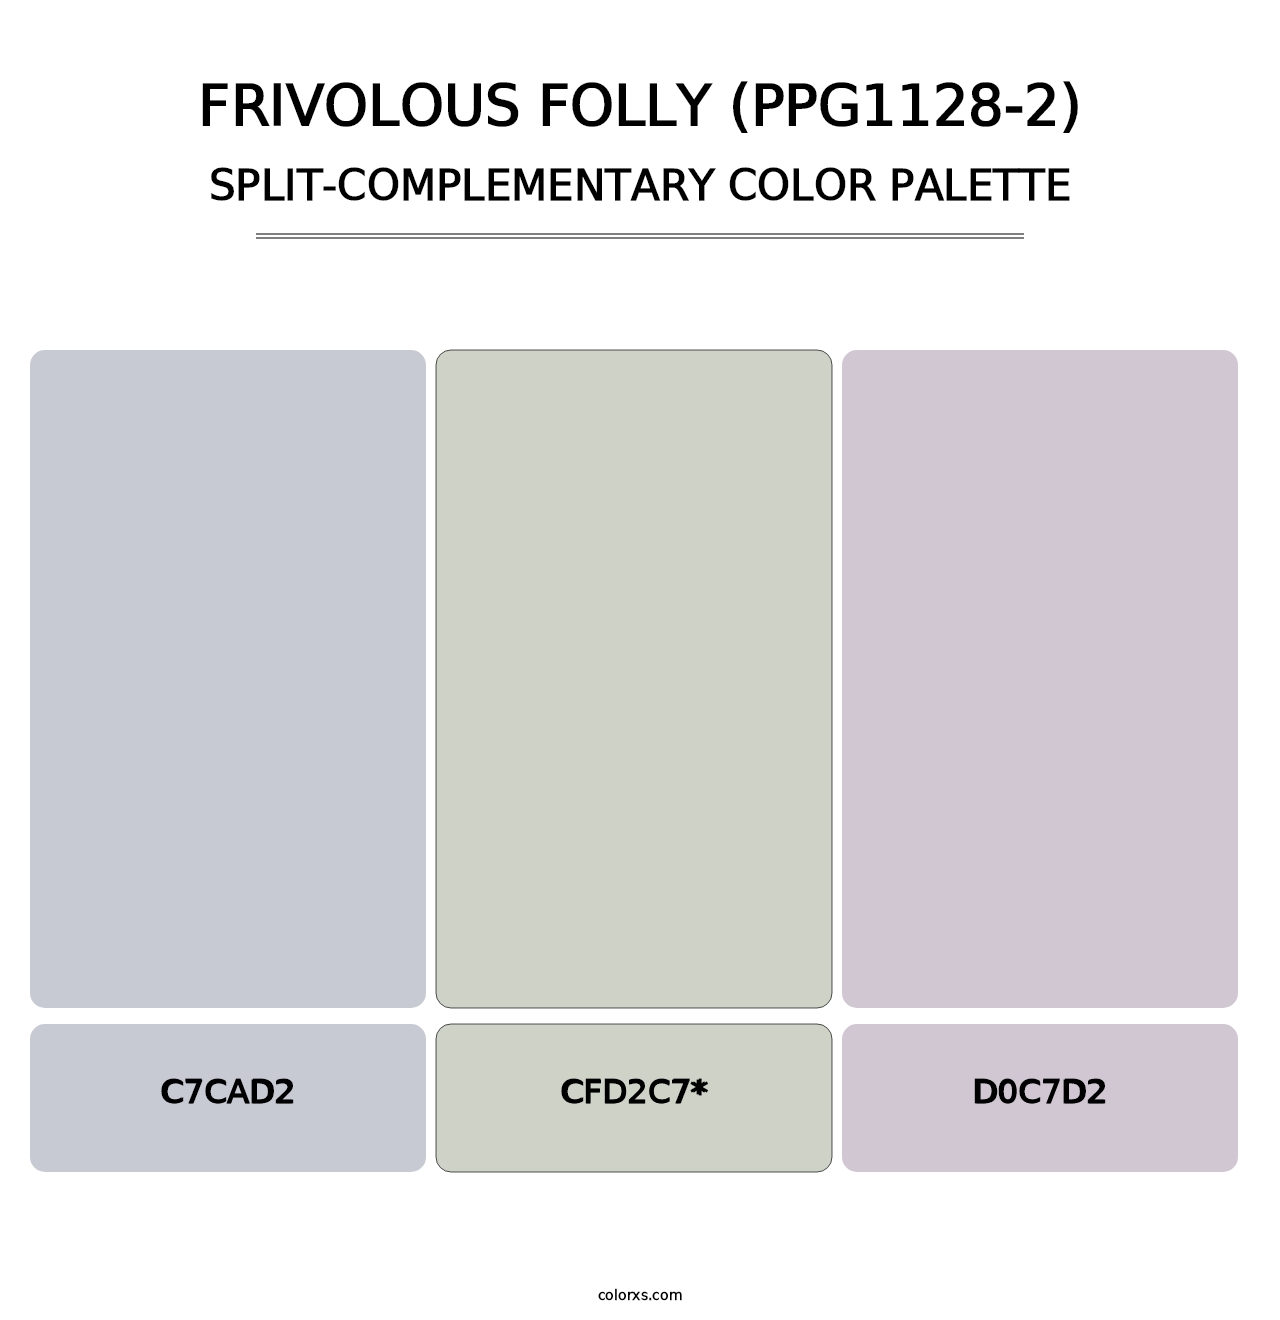 Frivolous Folly (PPG1128-2) - Split-Complementary Color Palette